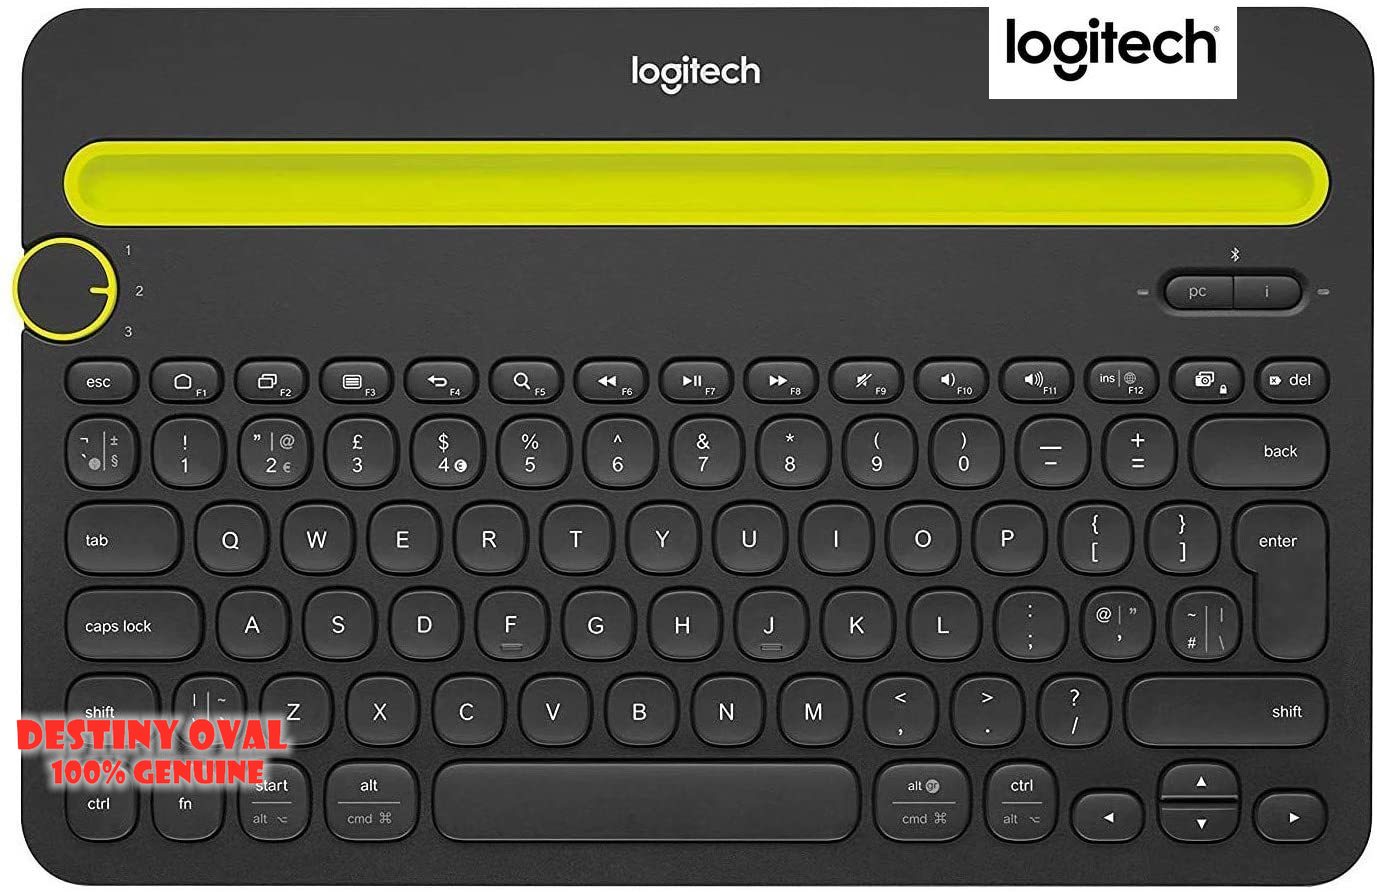 (Only English Letters) Logitech K480 Bluetooth Multi-Device Keyboard, คีย์บอร์ดตั้งโต๊ะแบบไร้สายสำหรับคอมพิวเตอร์, แท็บเล็ต, และสมาร์ทโฟนของคุณ, ของแท้, รับประกันศูนย์ไทย 1 ปี, สีดำ คีย์บอร์ดไรสาย keyboard bluetooth